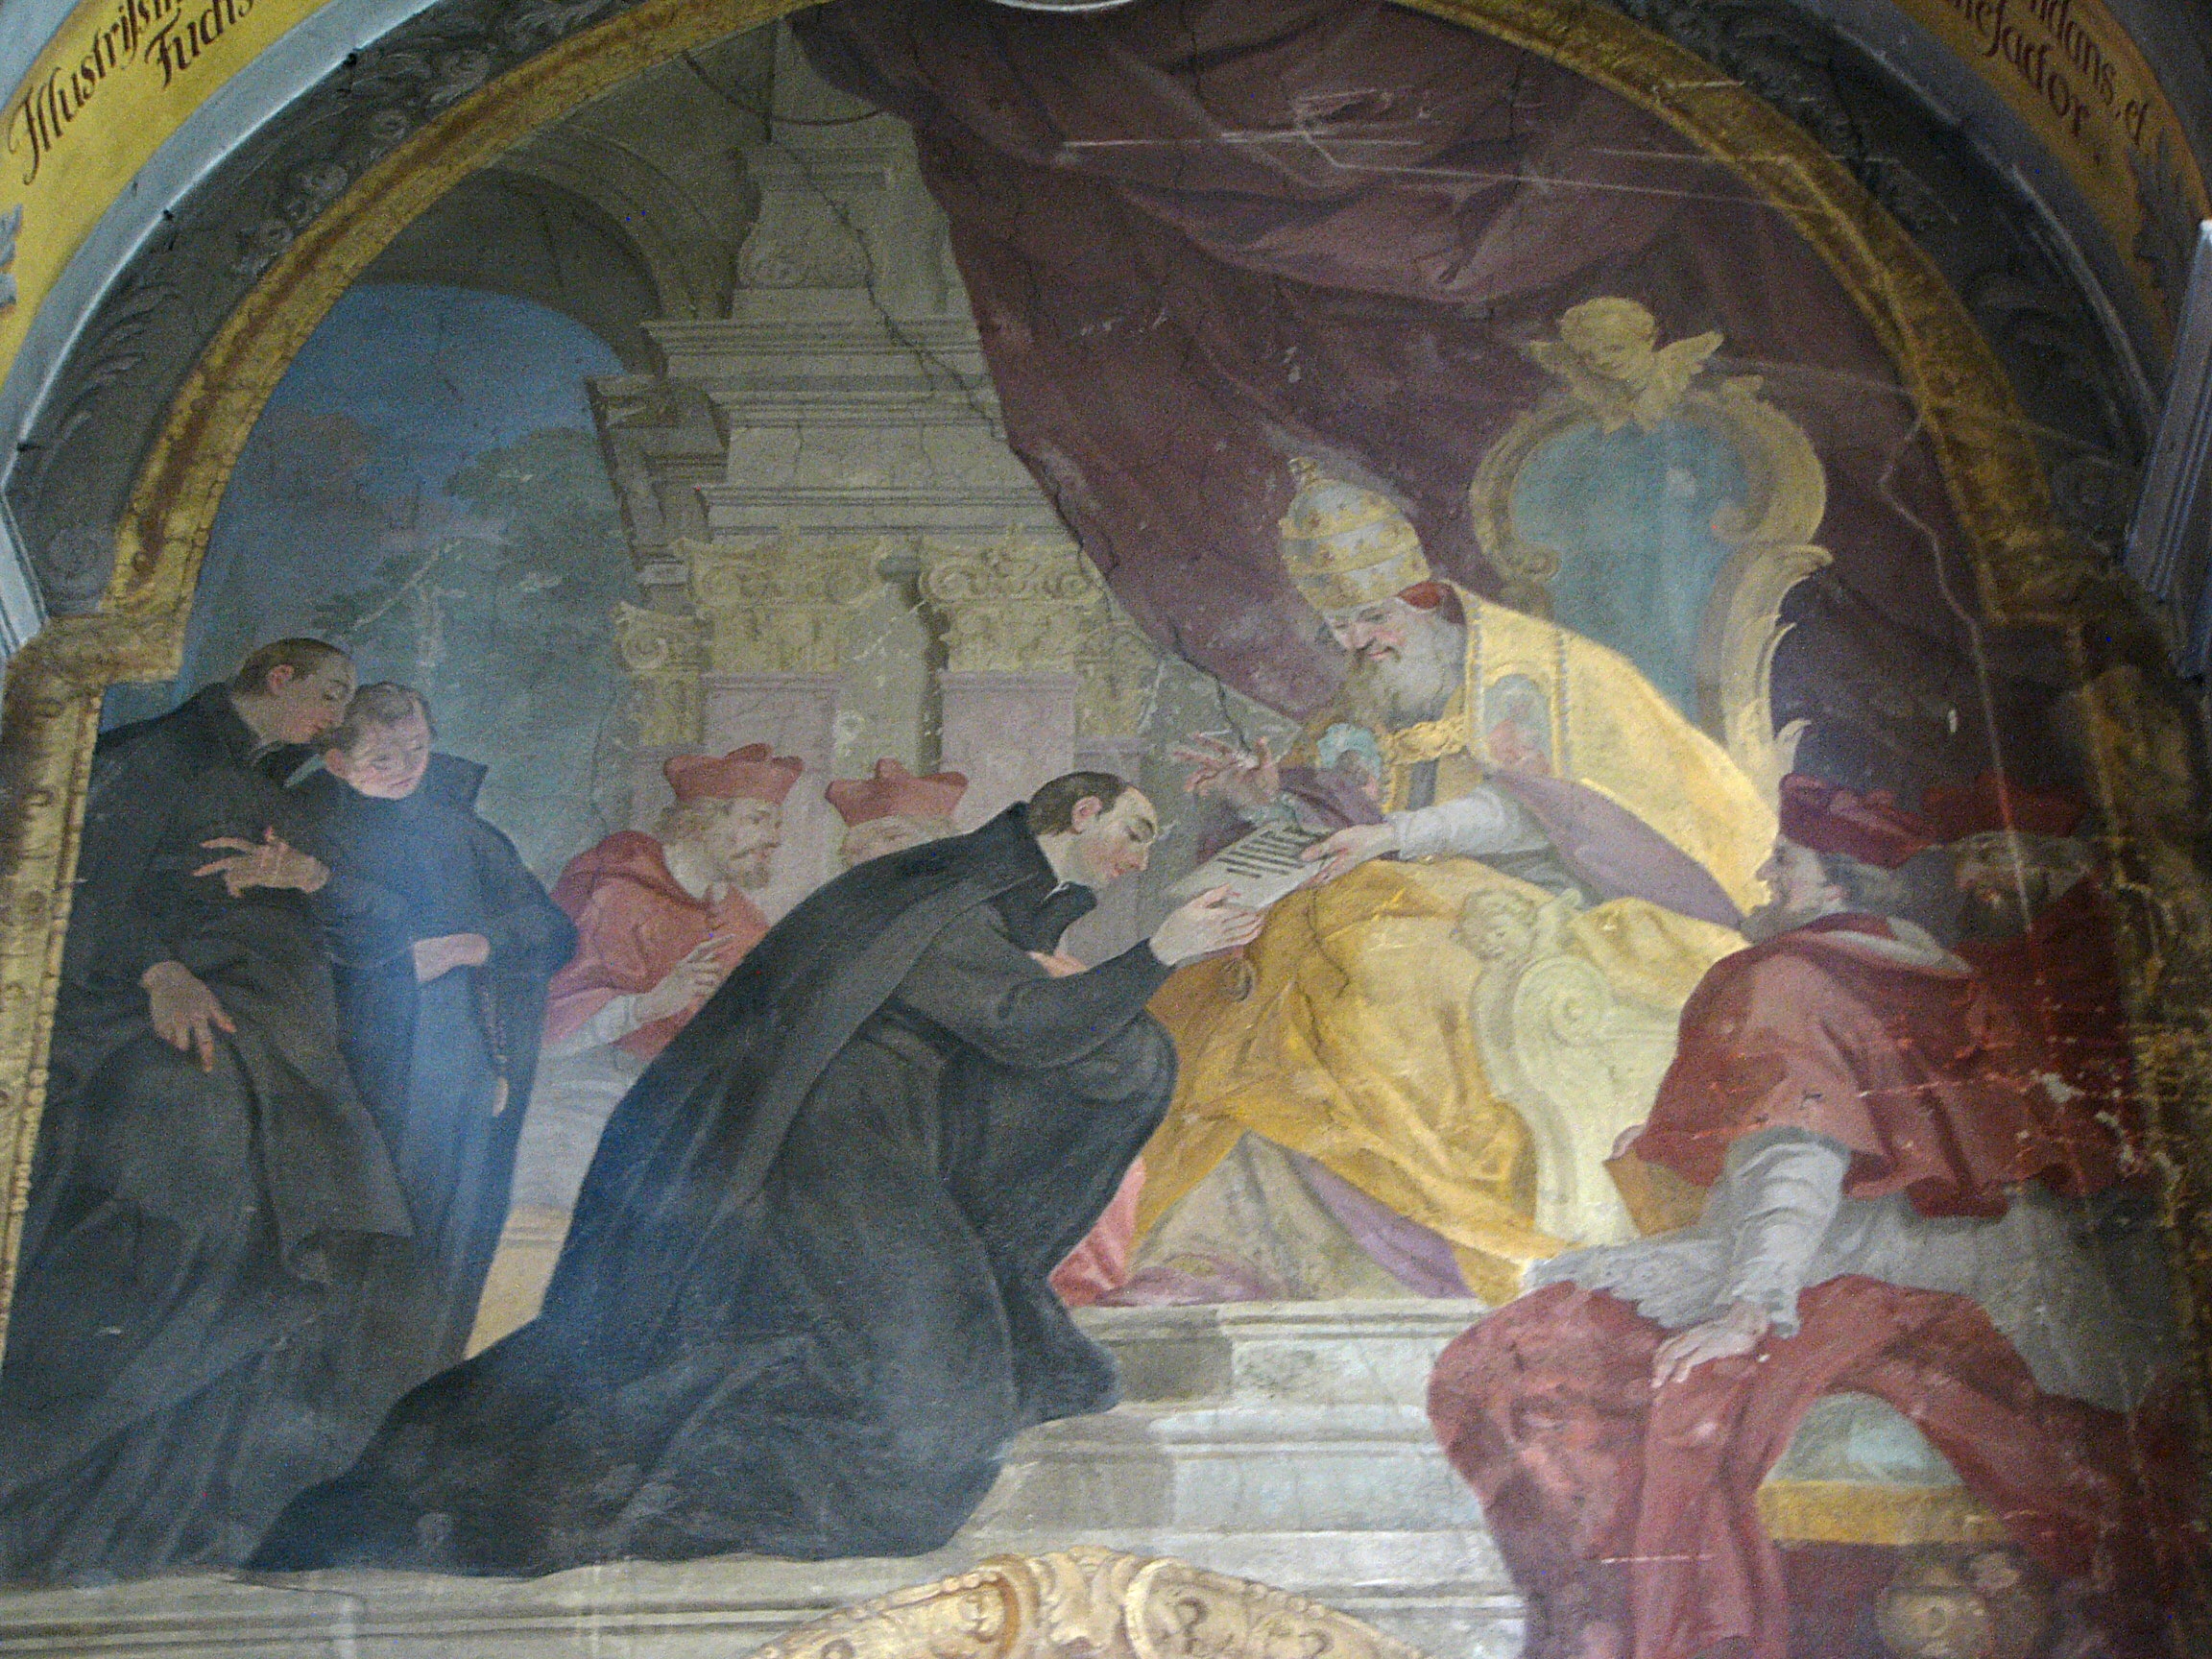 Fresco of Approving of bylaw of Society of Jesus.